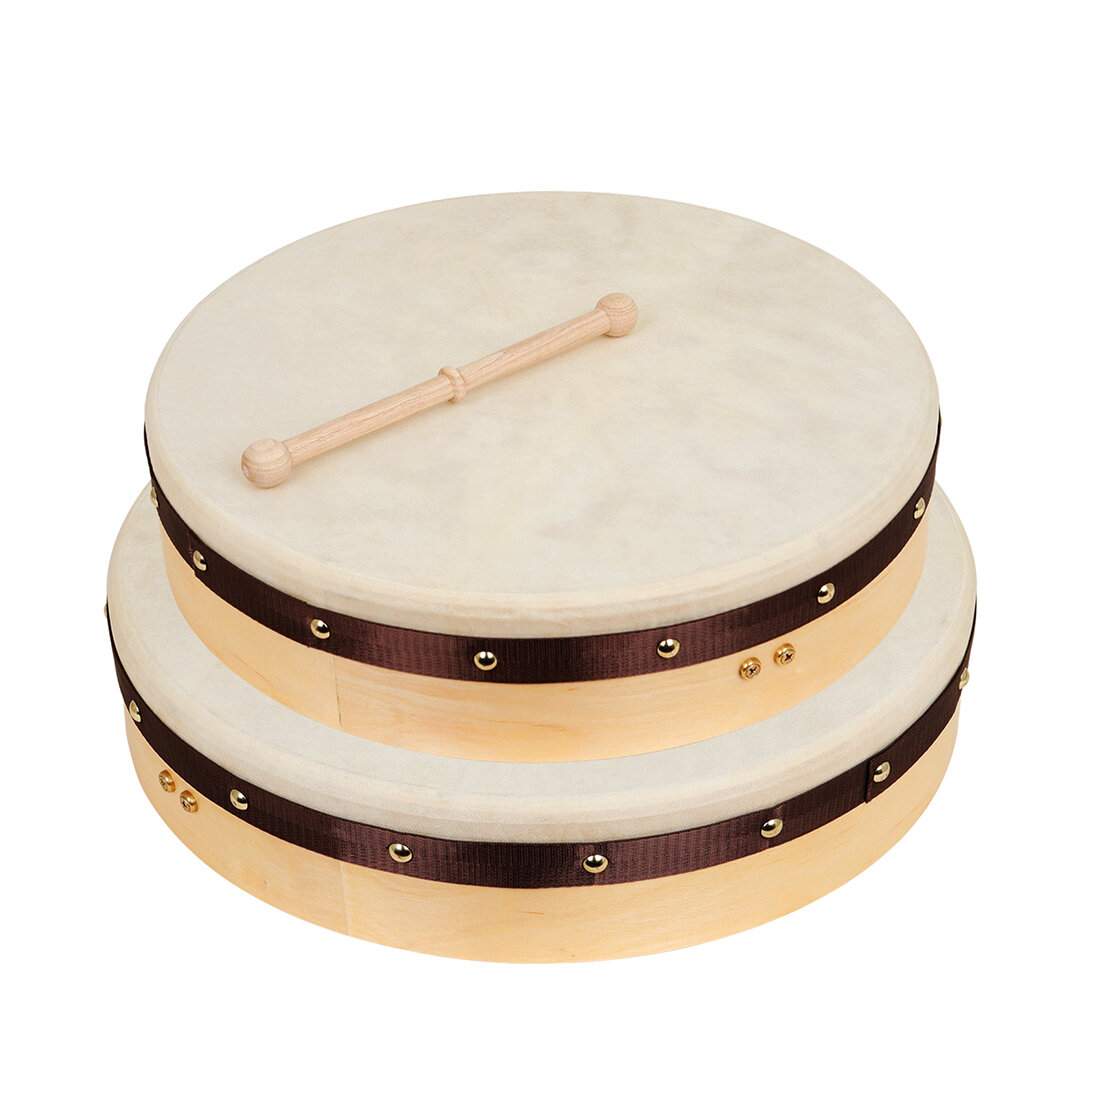 16" 18" IRIN Professional Wooden Hand Drum Percussion Instrument Sheepskin Tambourine Kids Education